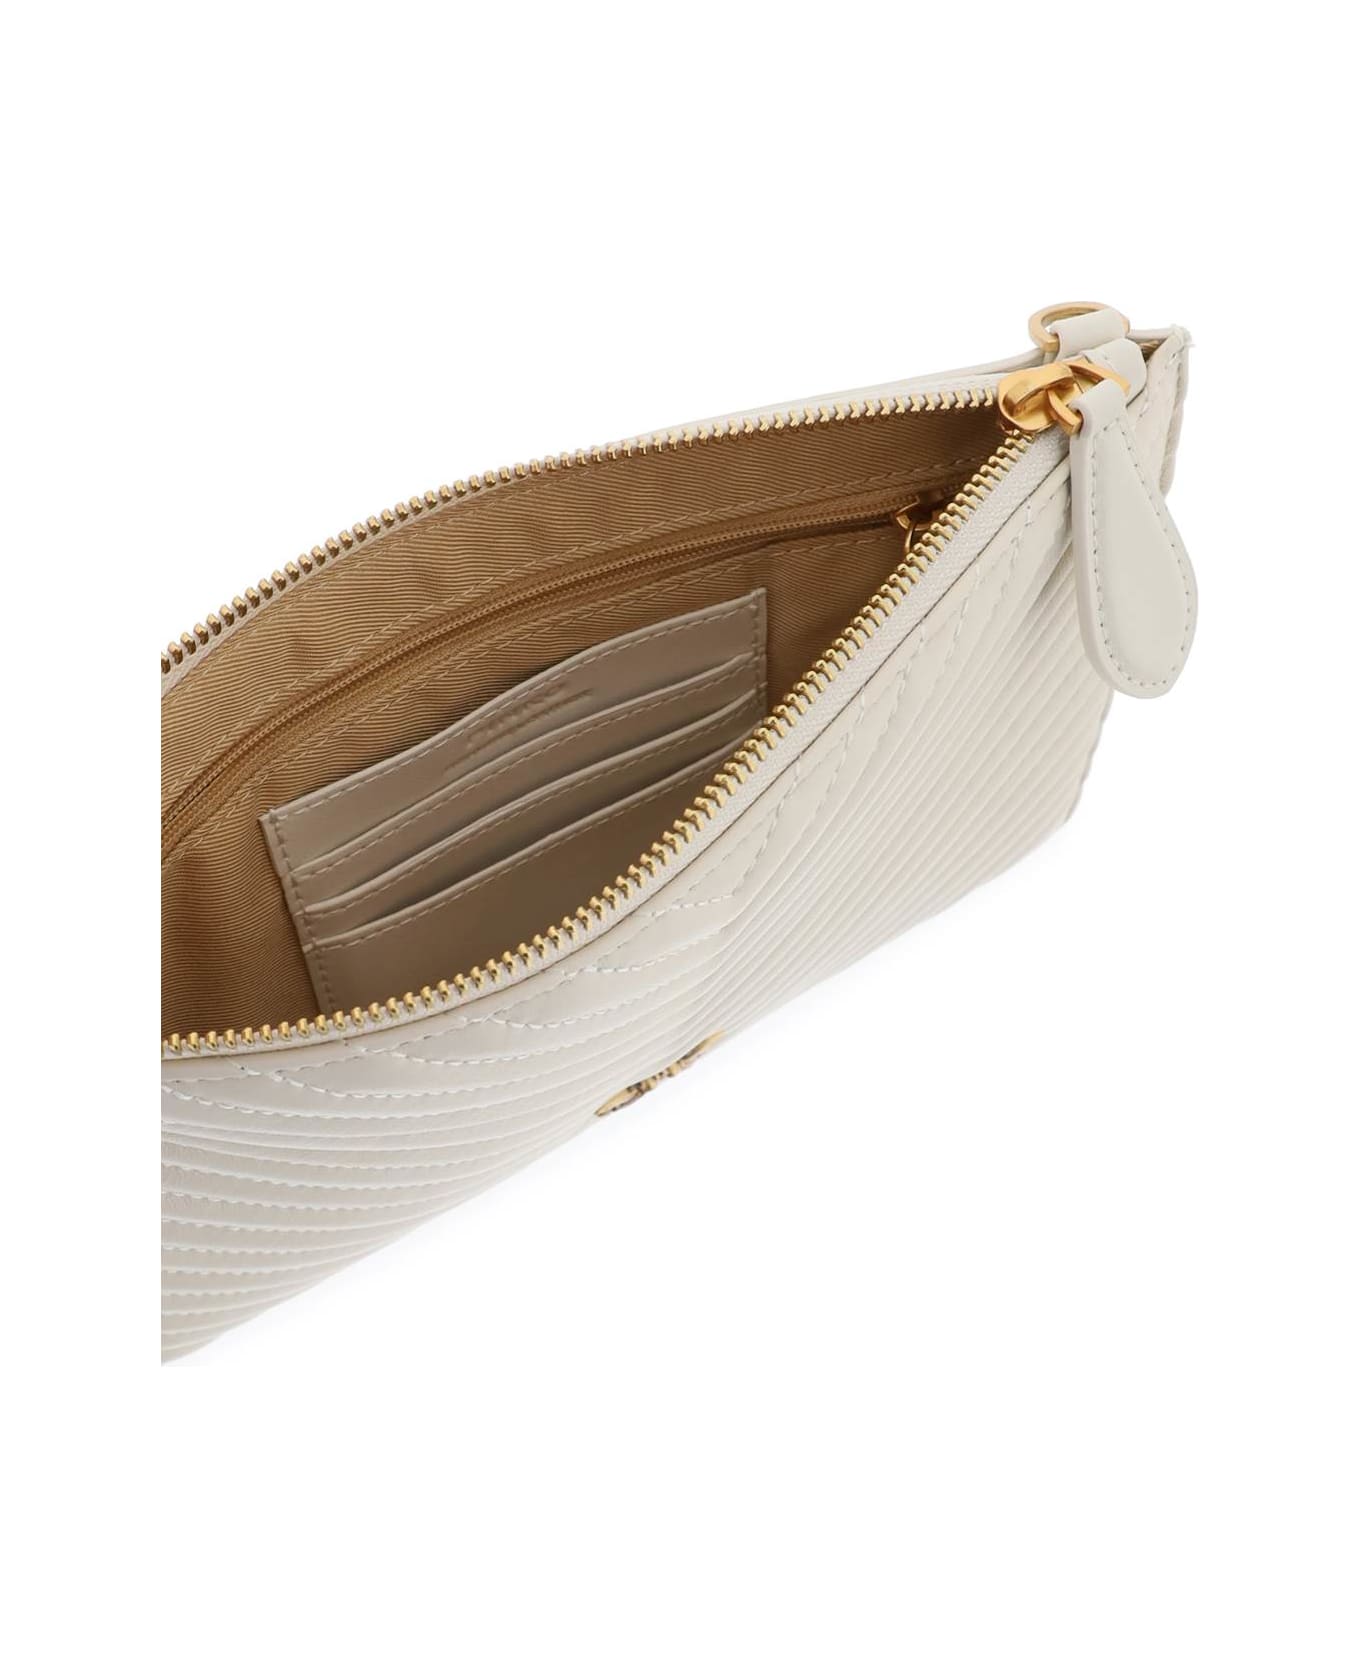 Pinko Classic Flat Love Bag Simply Clutch - BIANCO SETA ANTIQUE GOLD (White)